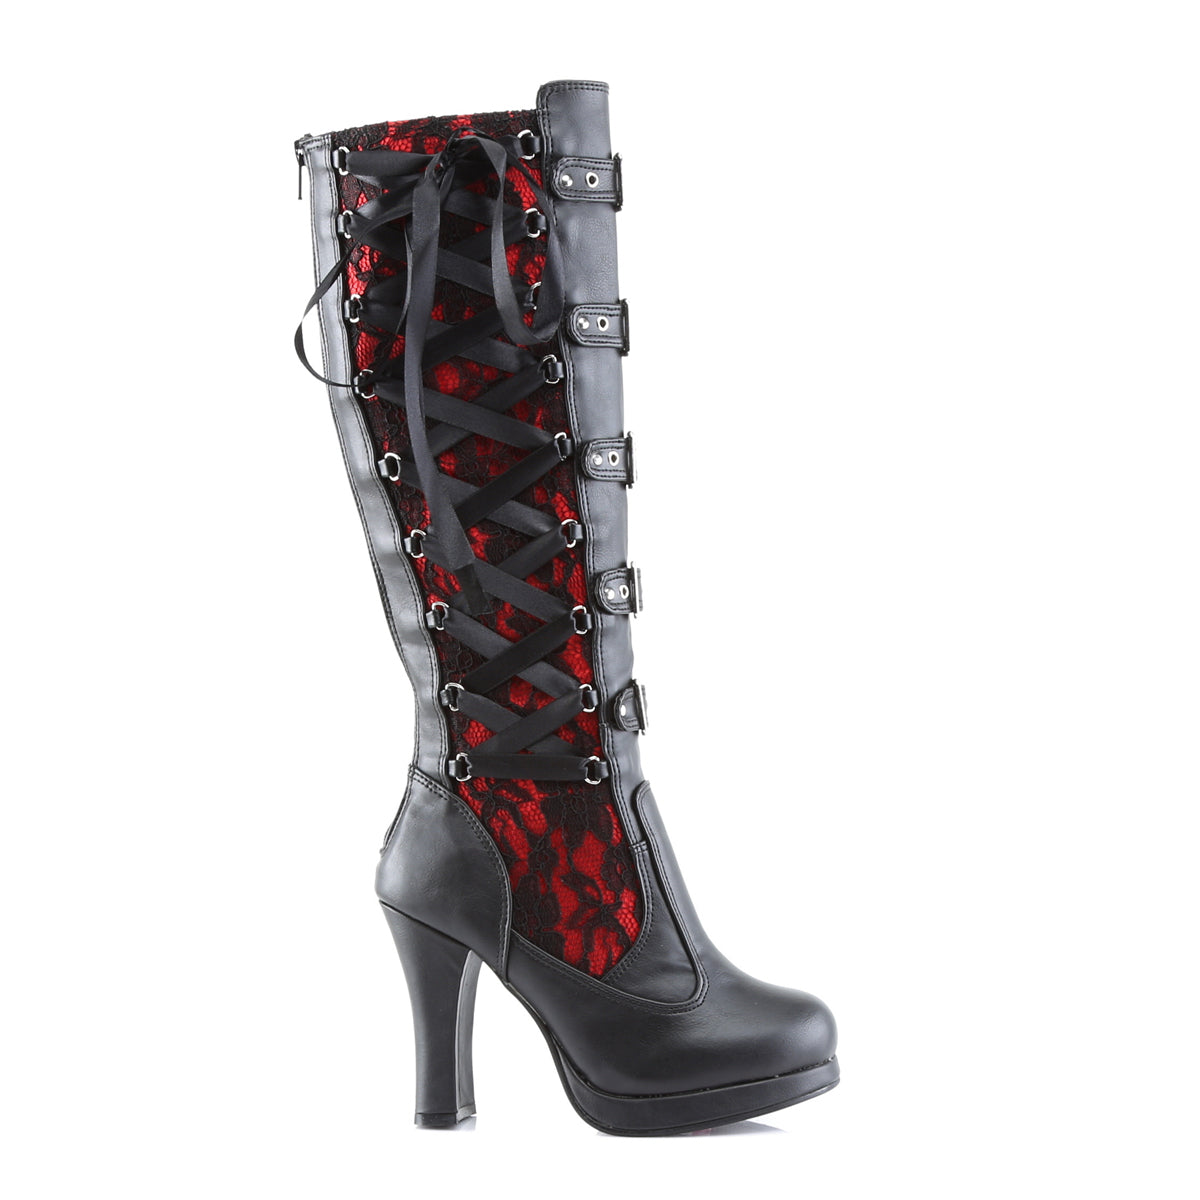 CRYPTO-106 Demonia Black-Red Vegan Leather Women's Mid-Calf & Knee High Boots [Demonia Cult Alternative Footwear]